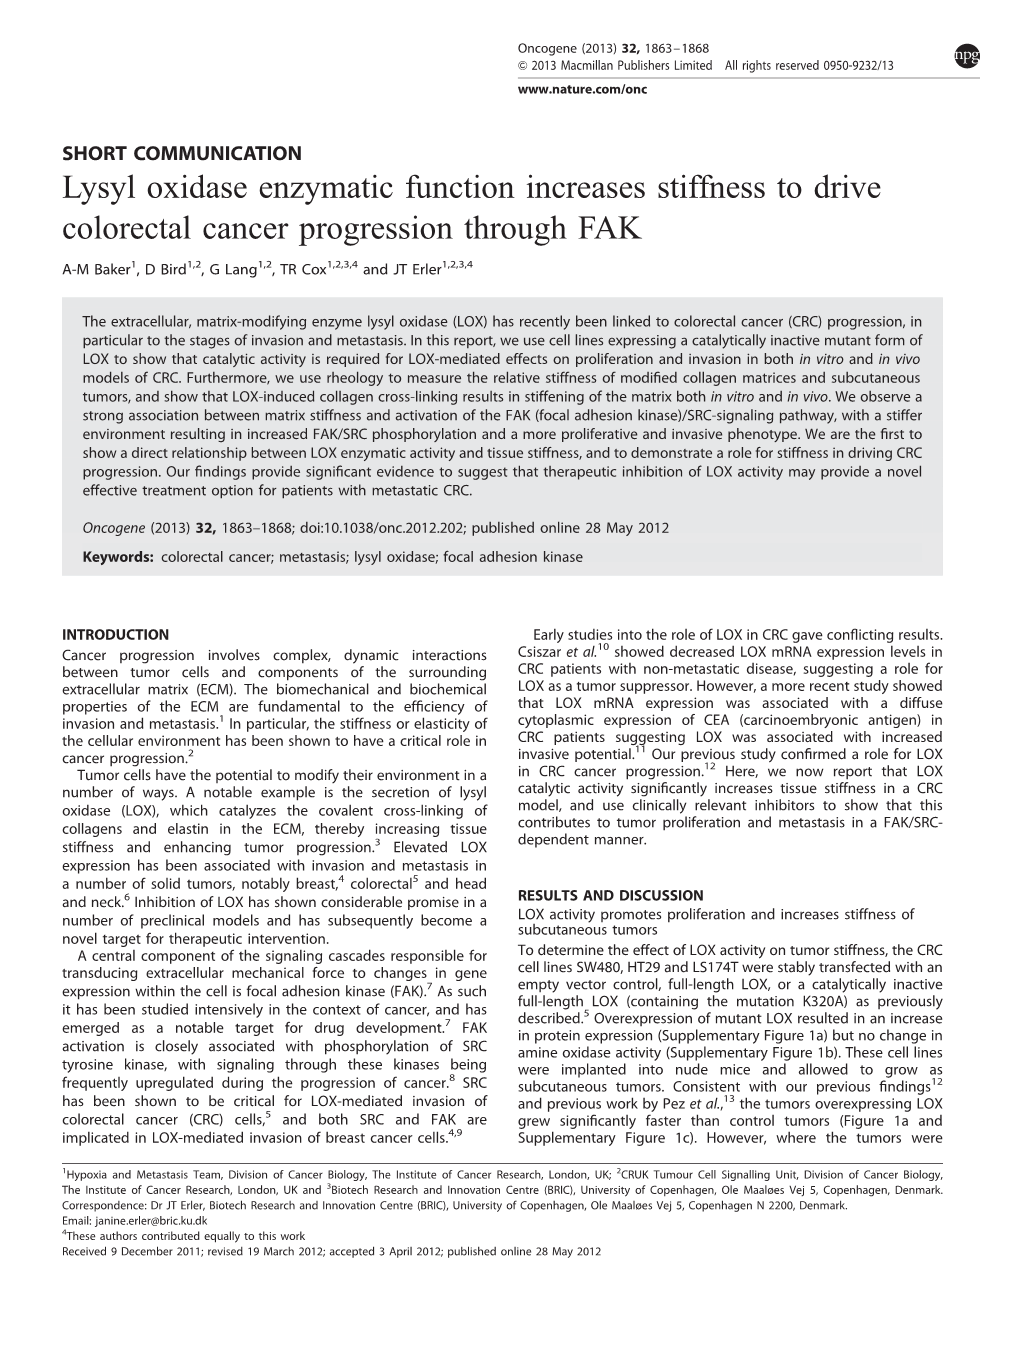 Lysyl Oxidase Enzymatic Function Increases Stiffness to Drive Colorectal Cancer Progression Through FAK